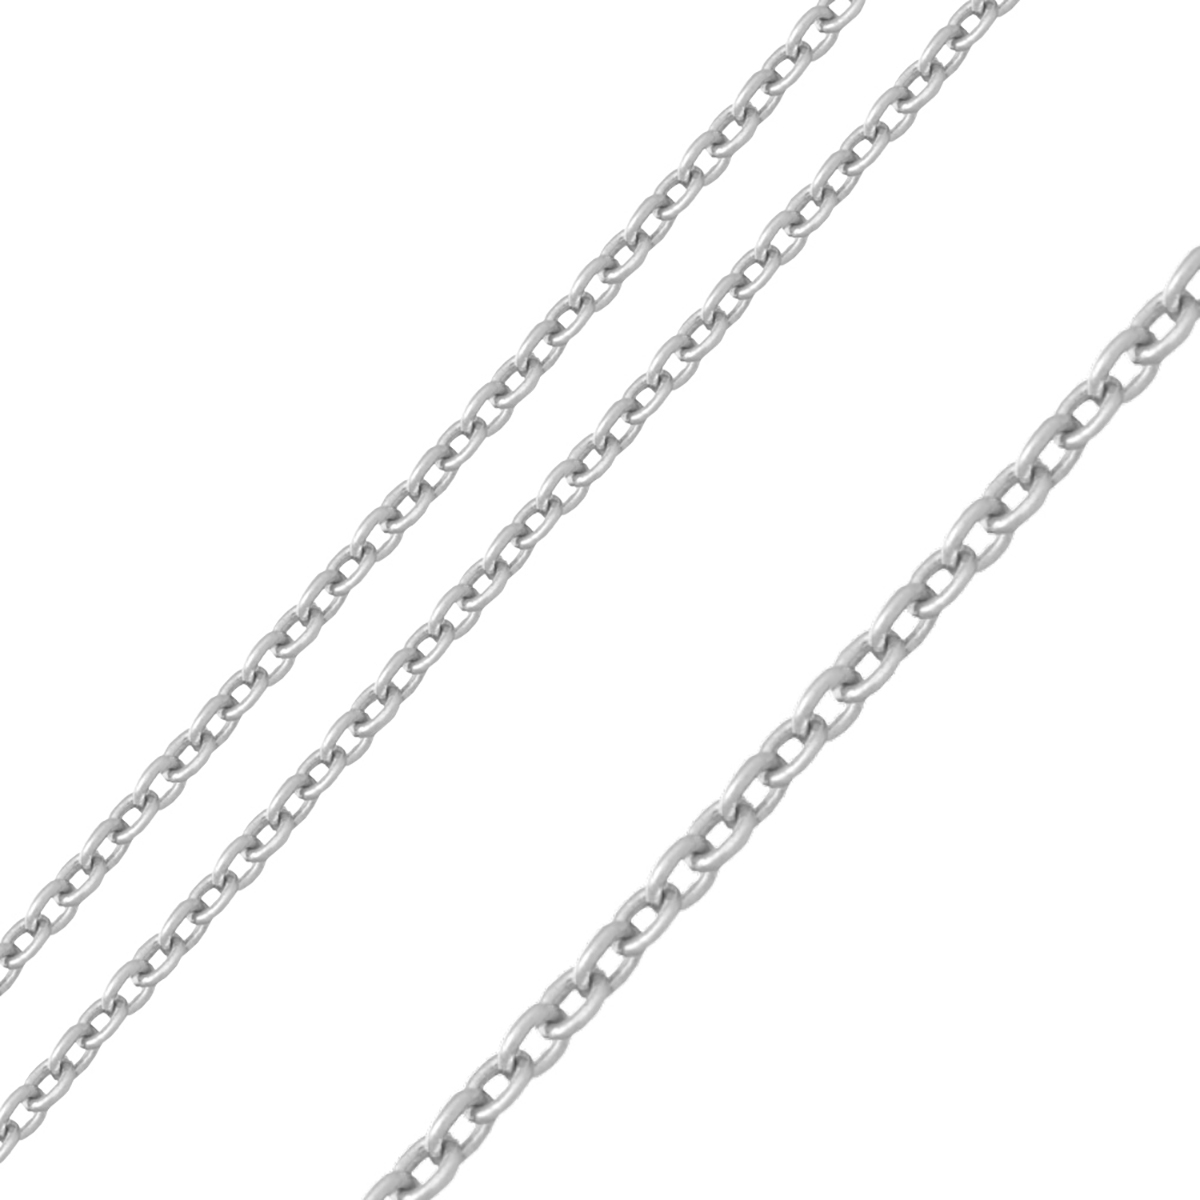 Ankerketting, 935/- zilver, draad 0,5 mm, rond, breedte 2,4 mm